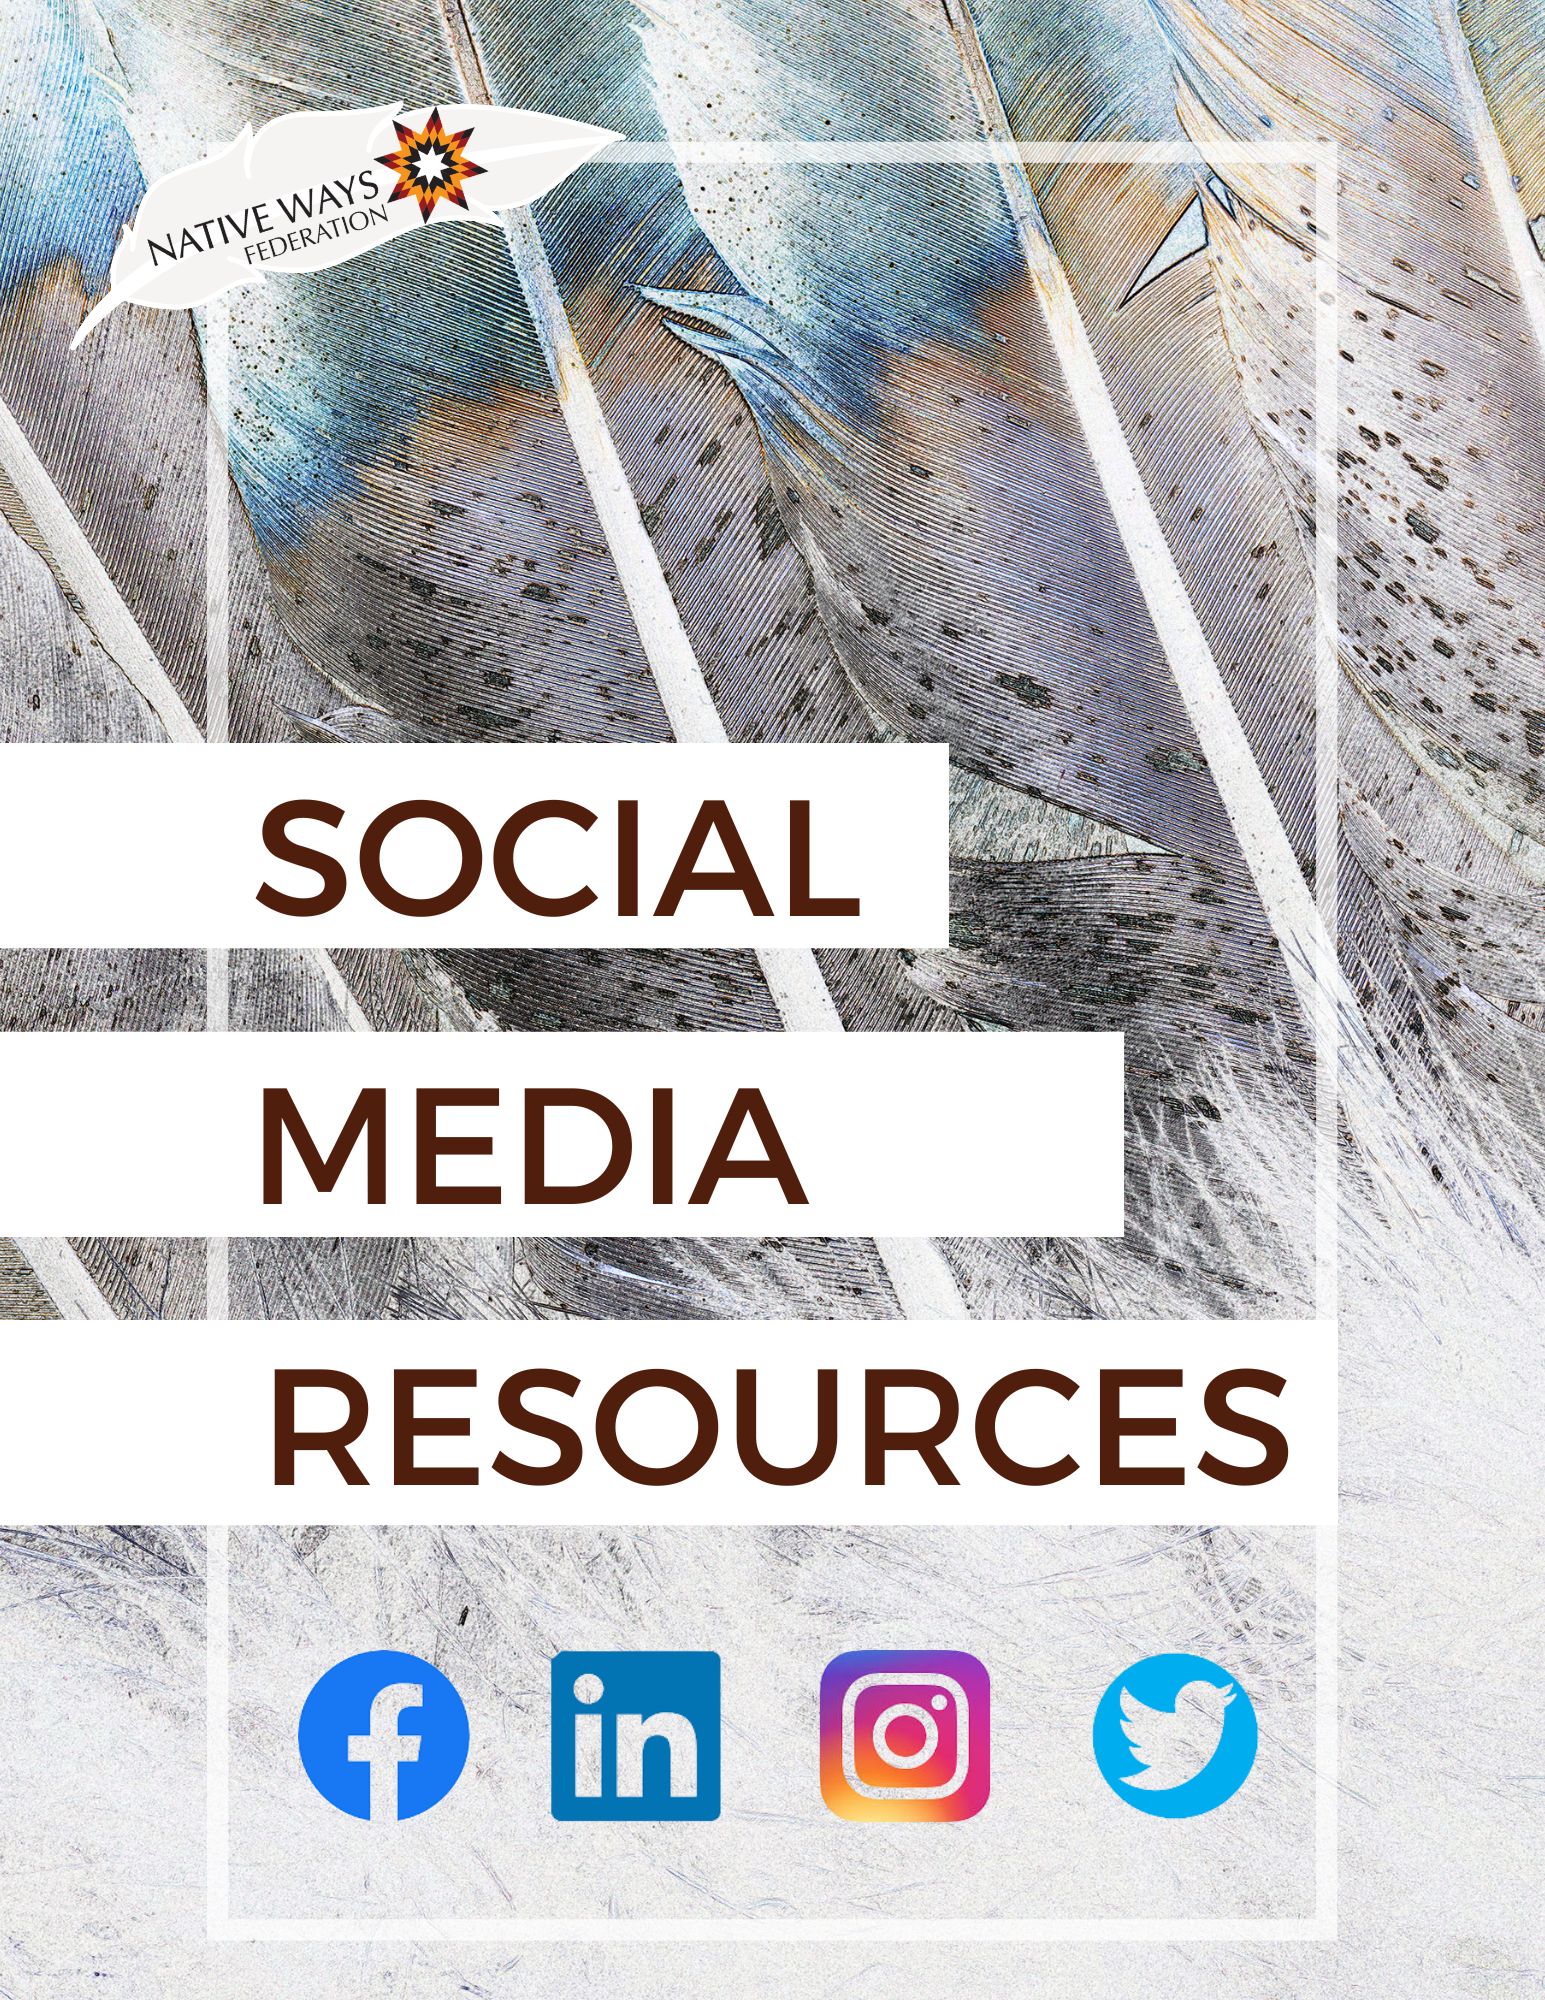 Clickable social media resources graphic